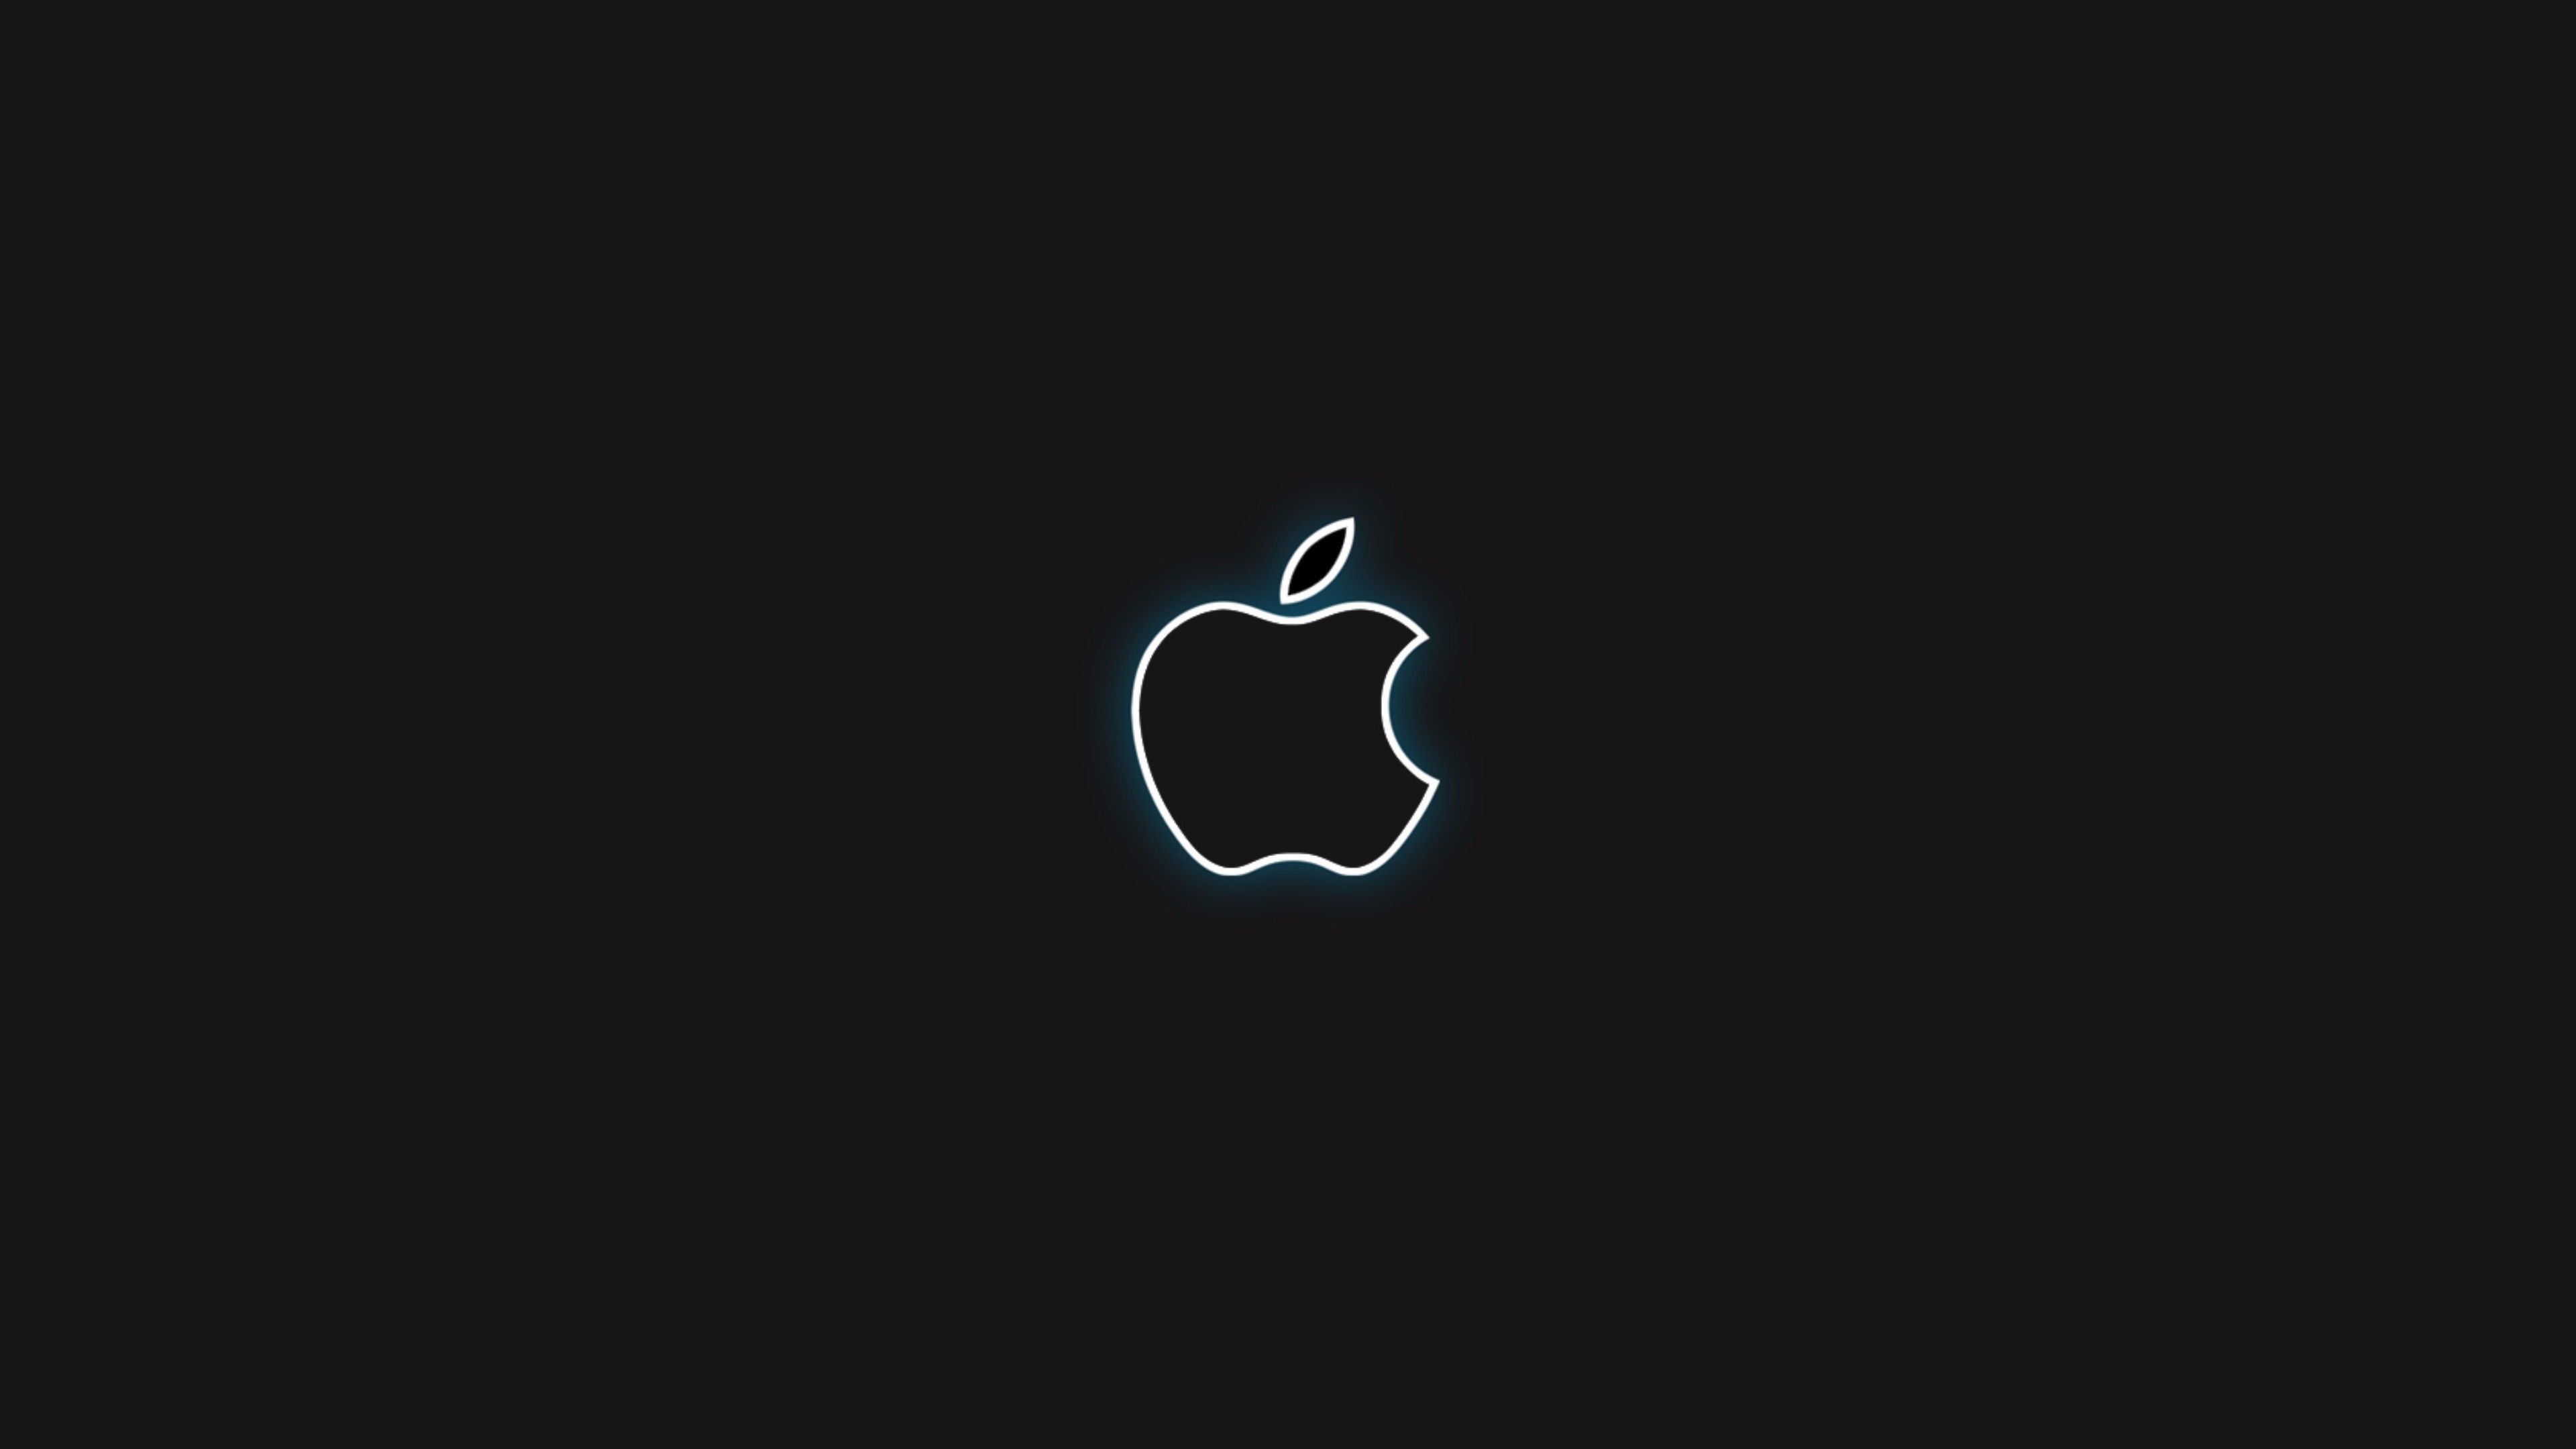 black apple logo 4k wallpaper free 4k wallpaper. Apple logo wallpaper, Black apple wallpaper, Black apple logo